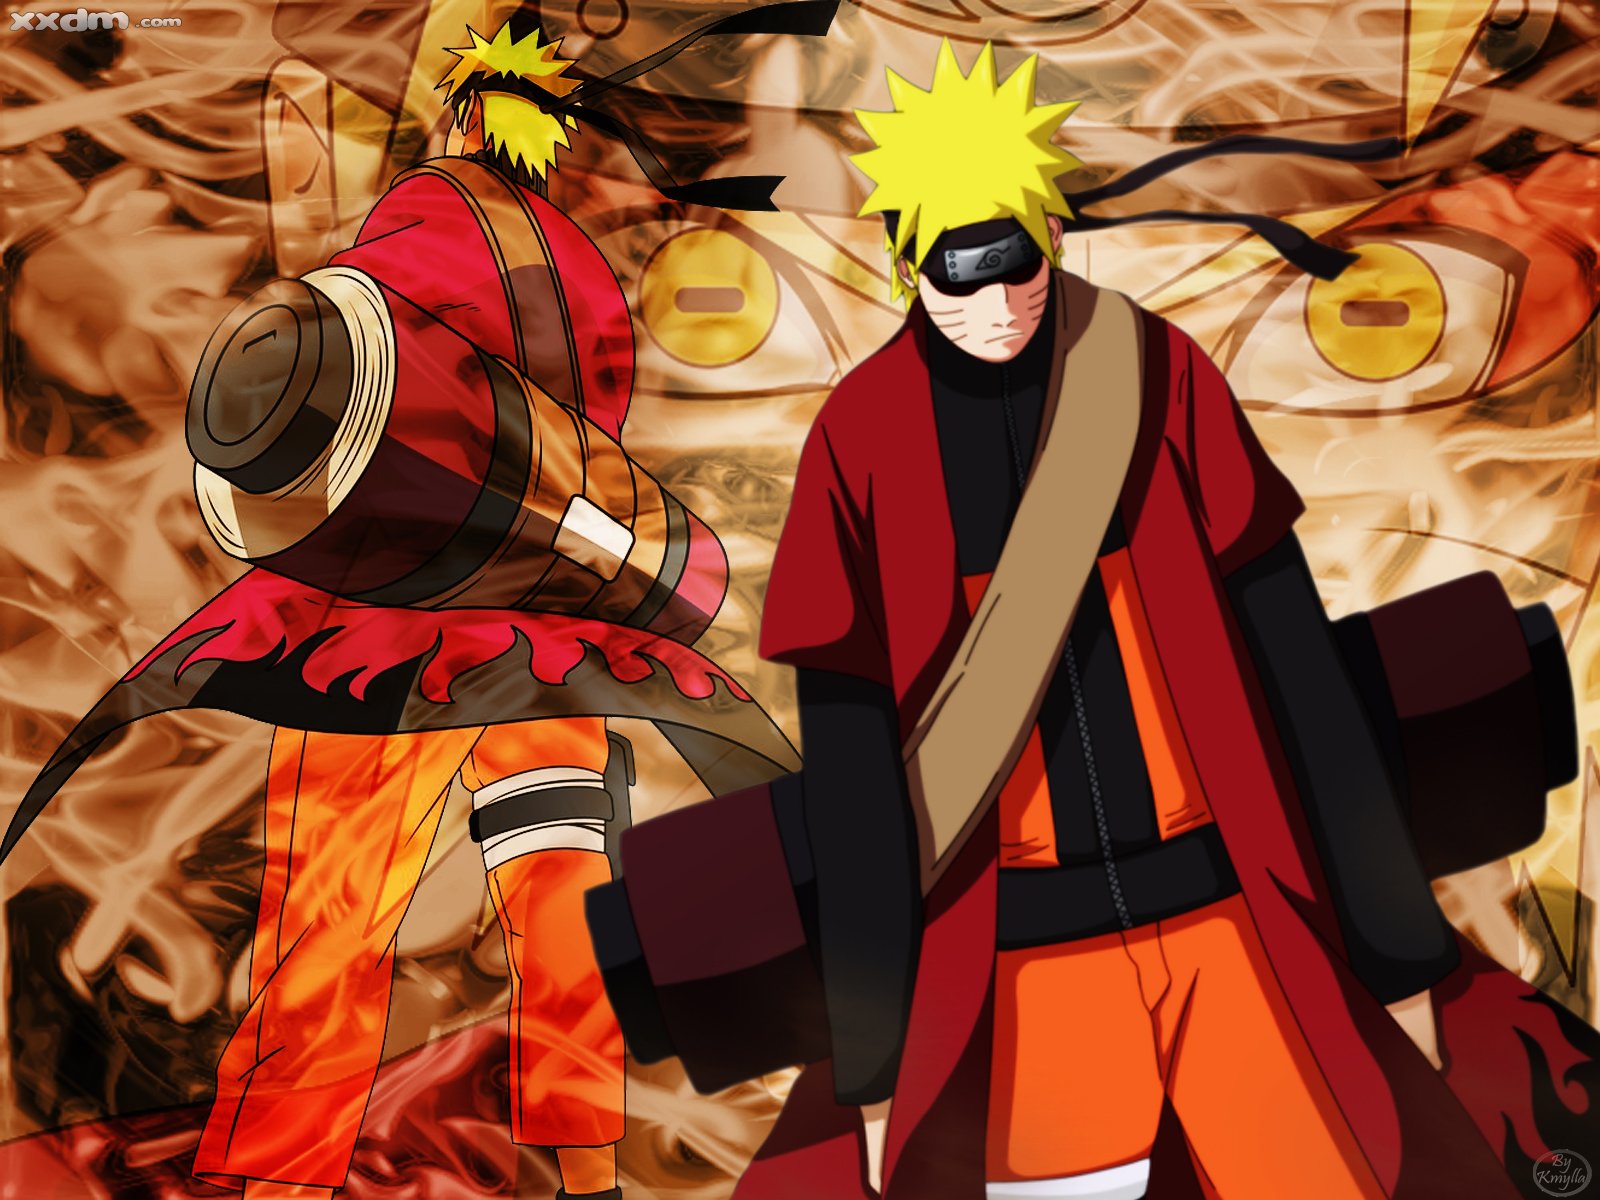 Gambar Naruto Lengkap 2020 : 100+ Gambar Naruto (KEREN, HD, ROMANTIS, TERBAIK, LENGKAP) : Untuk ...